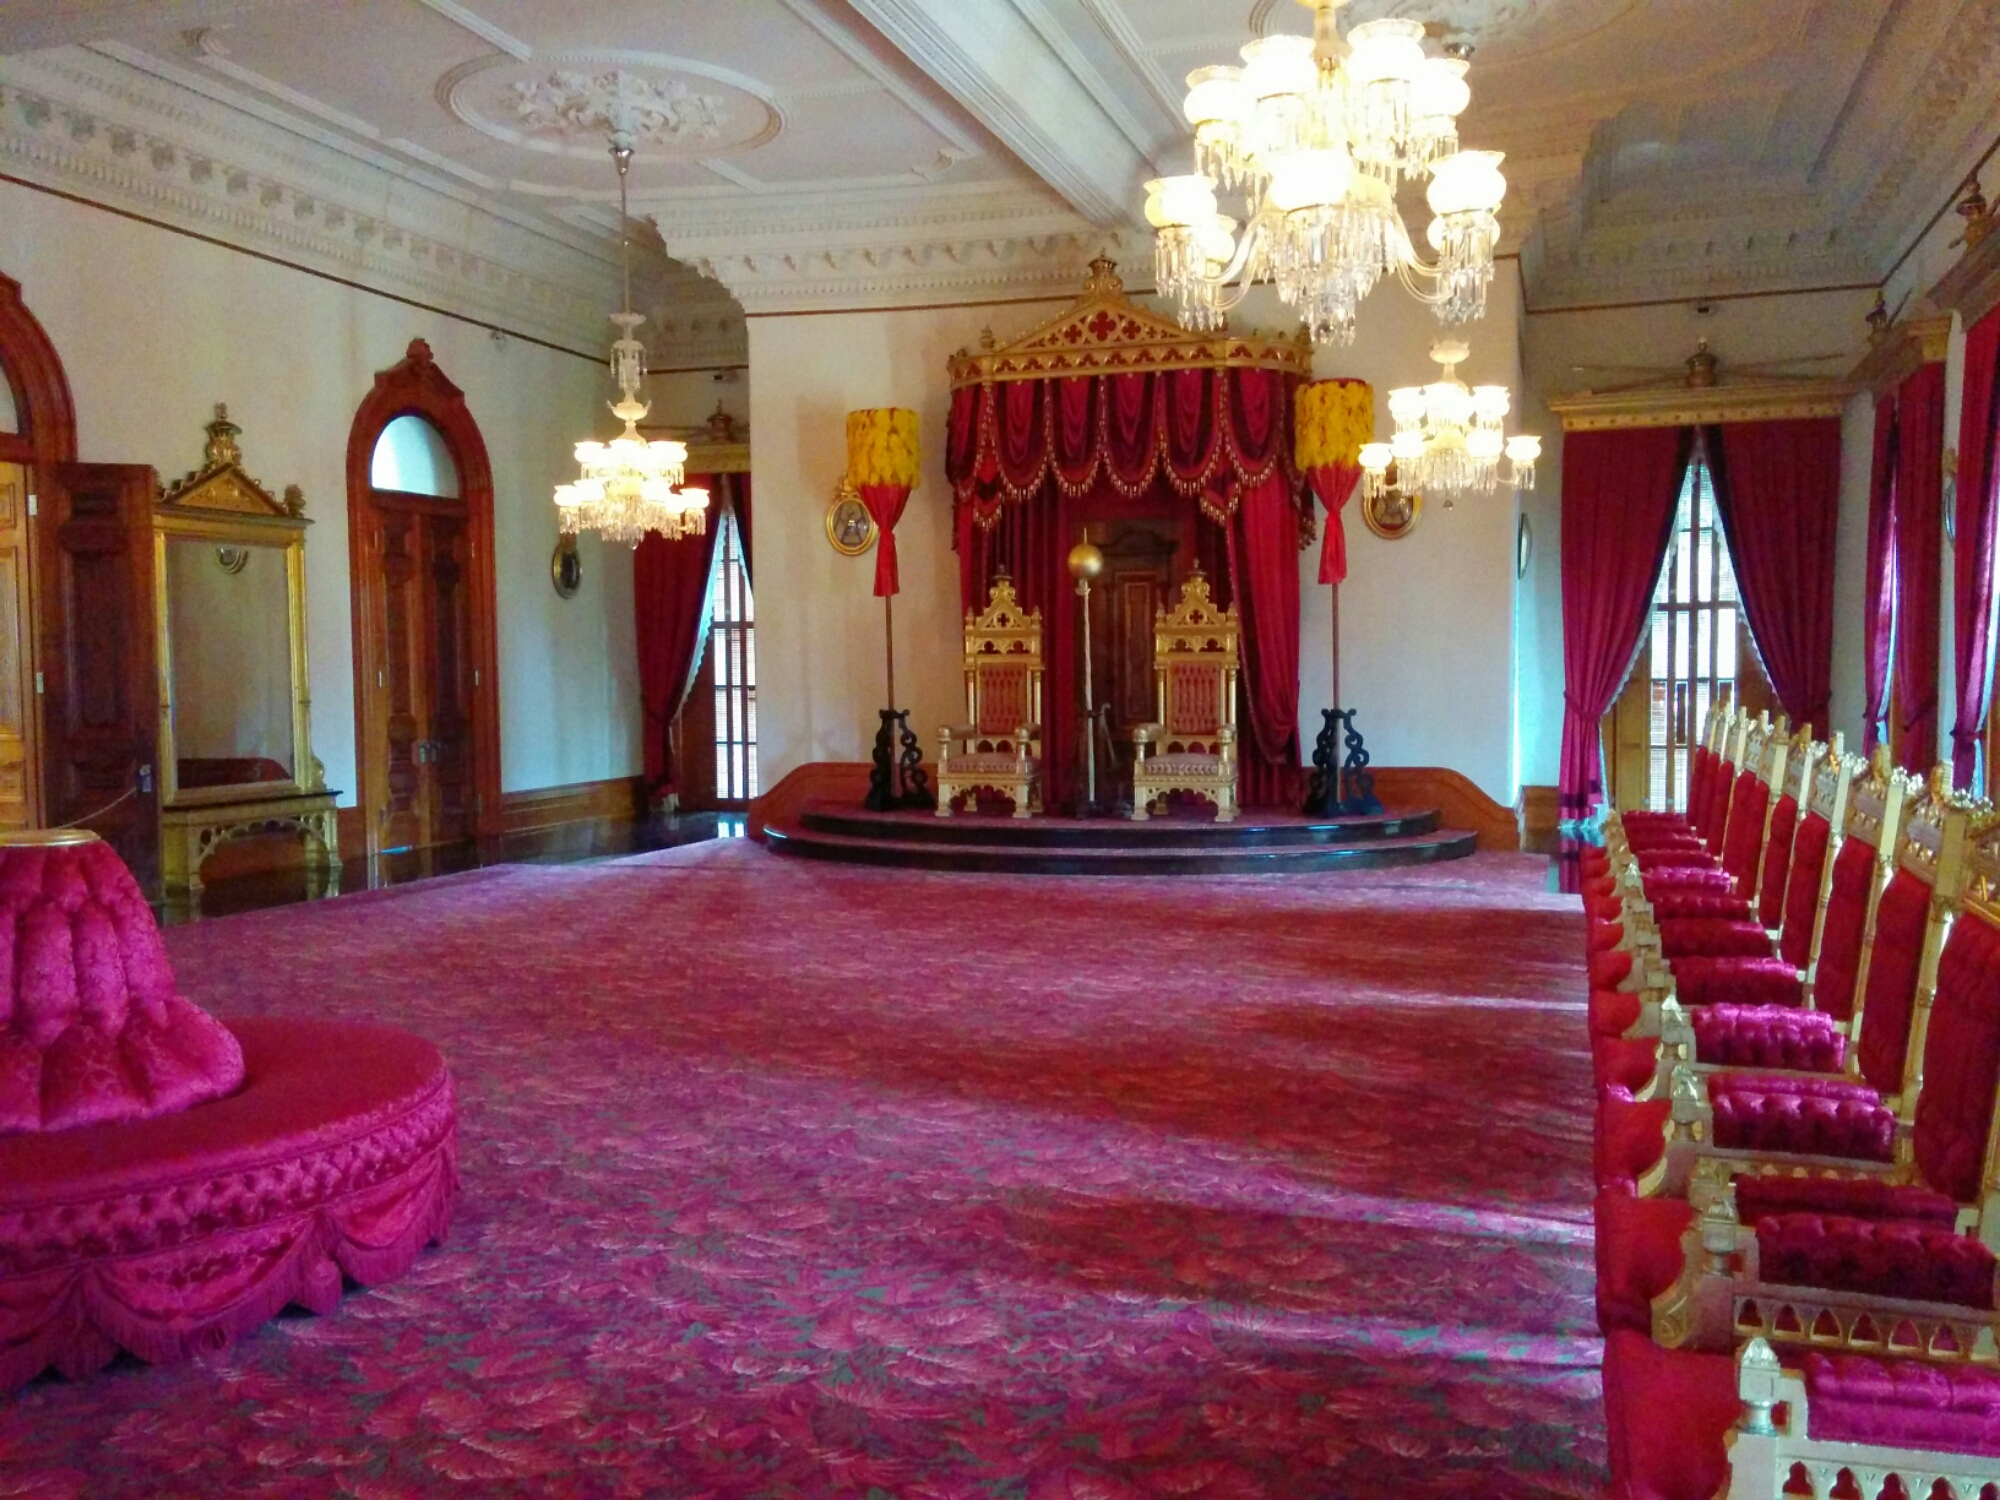 Iolani Palace interior